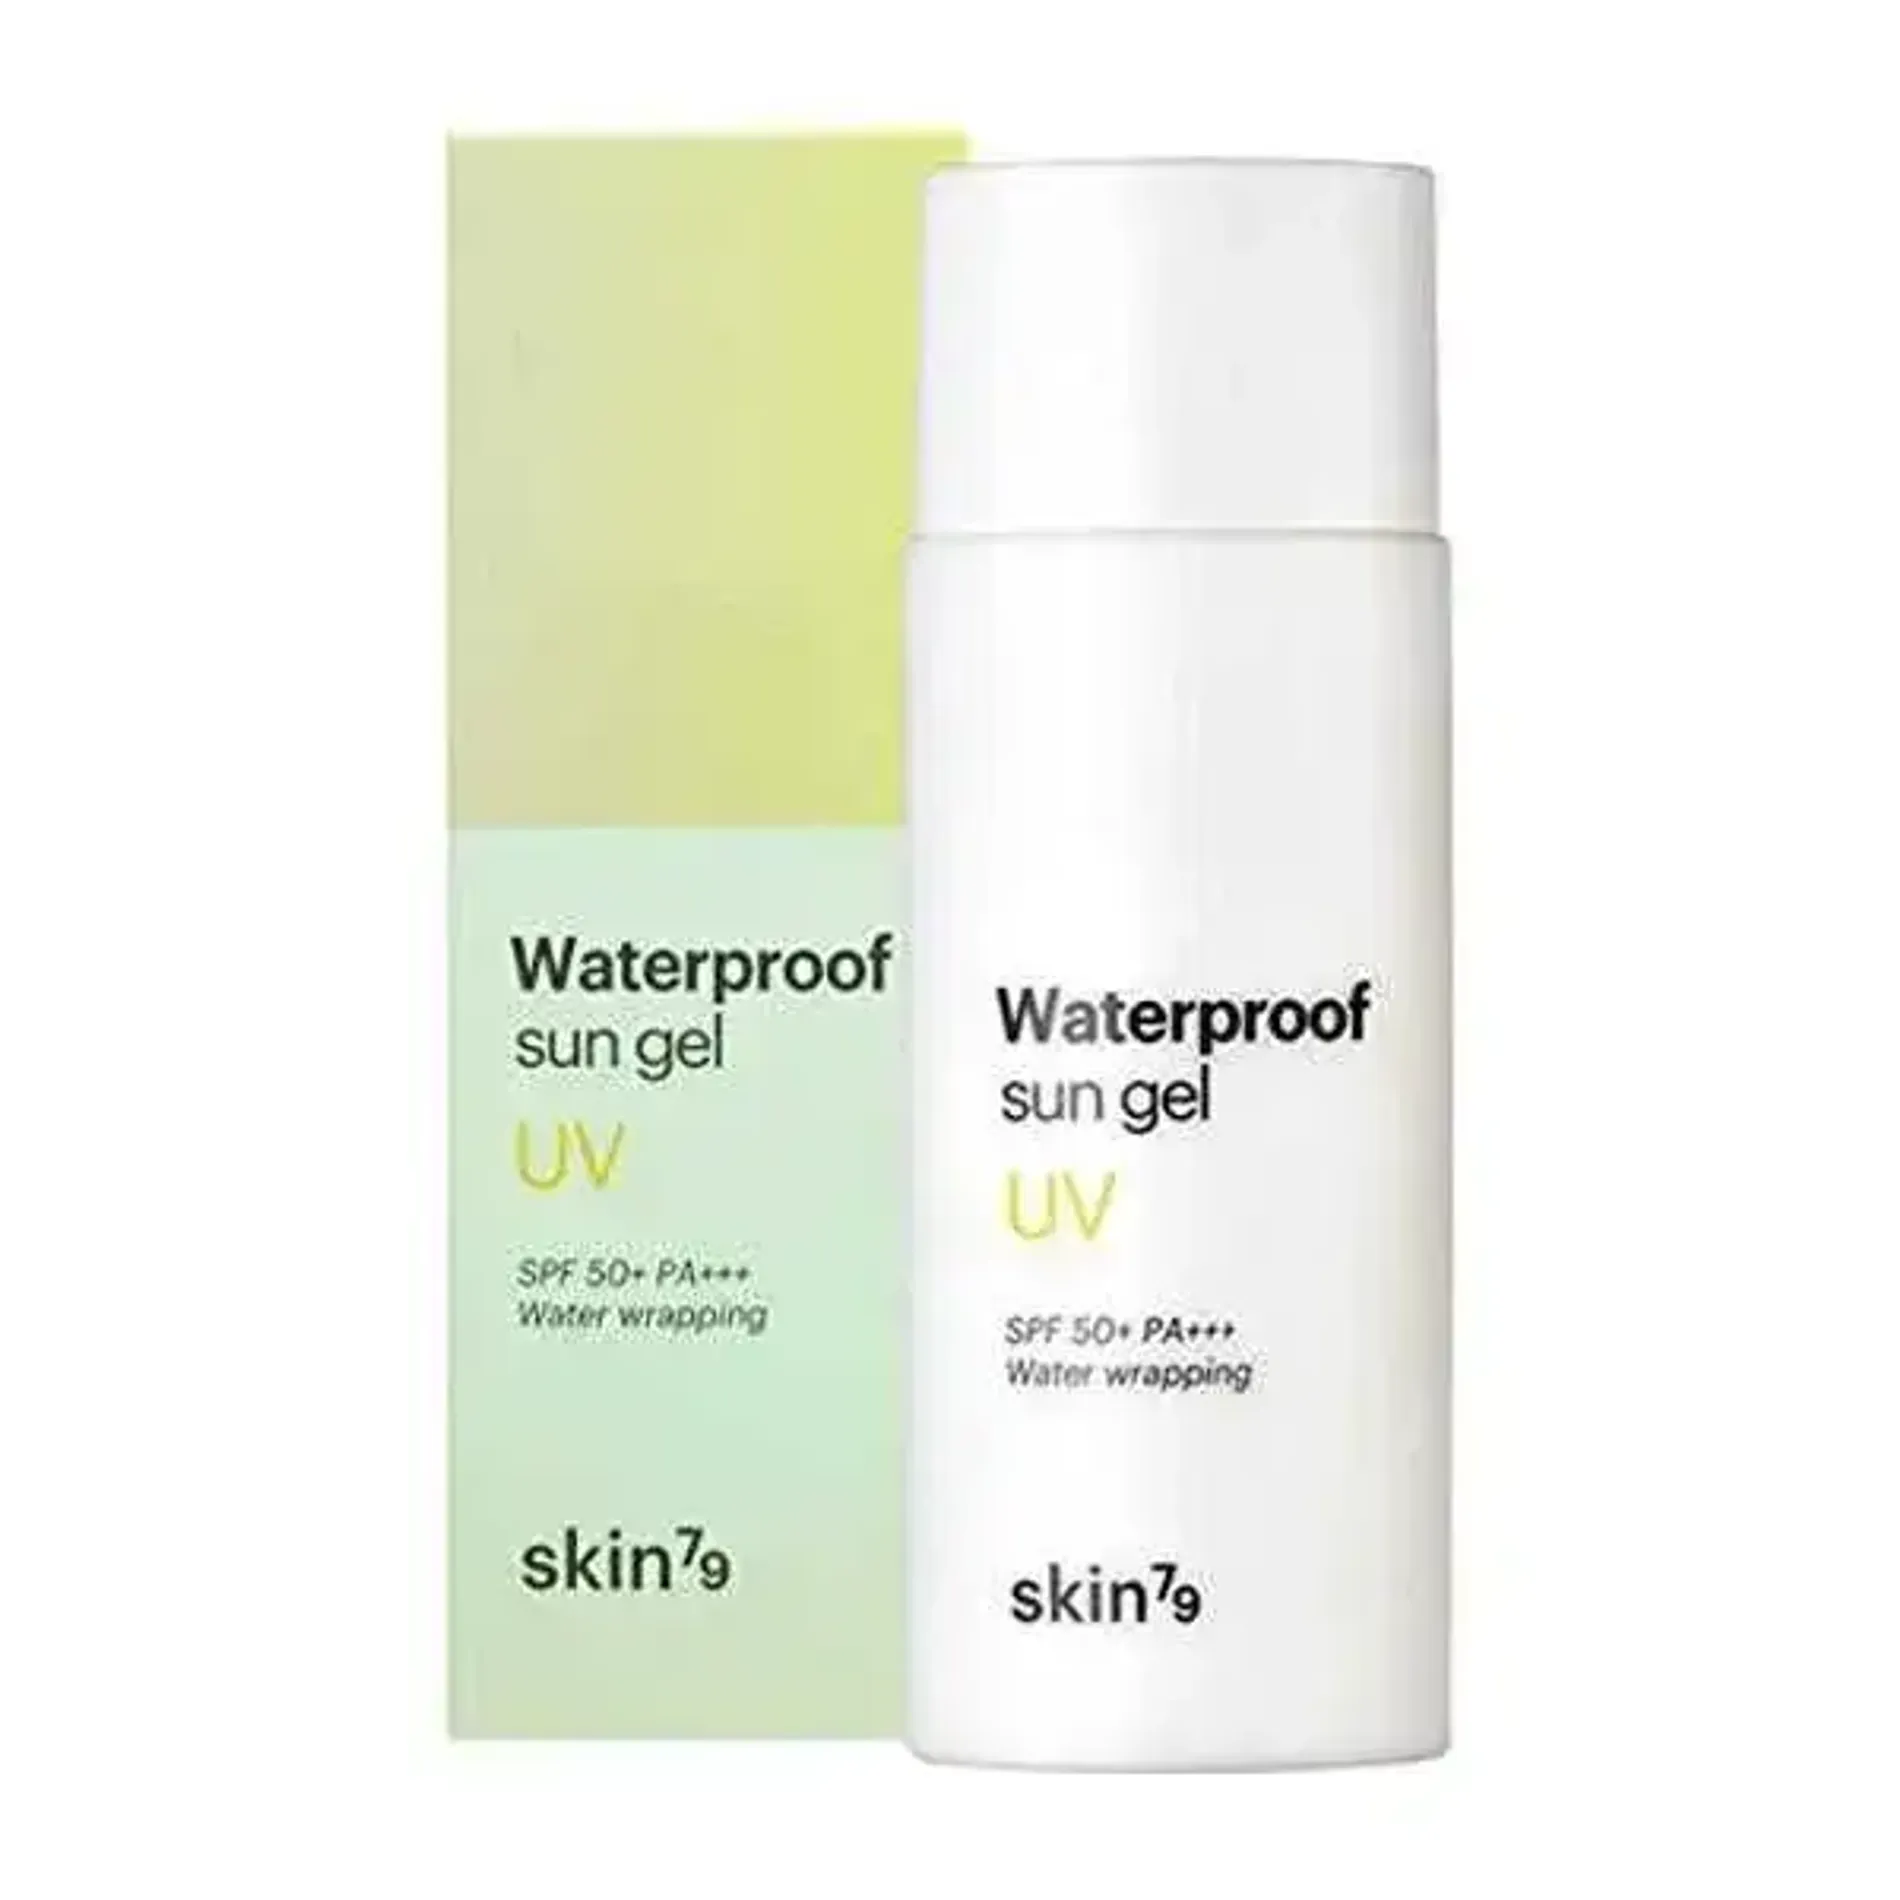 kem-chong-nang-skin79-water-wrapping-waterproof-sun-gel-1